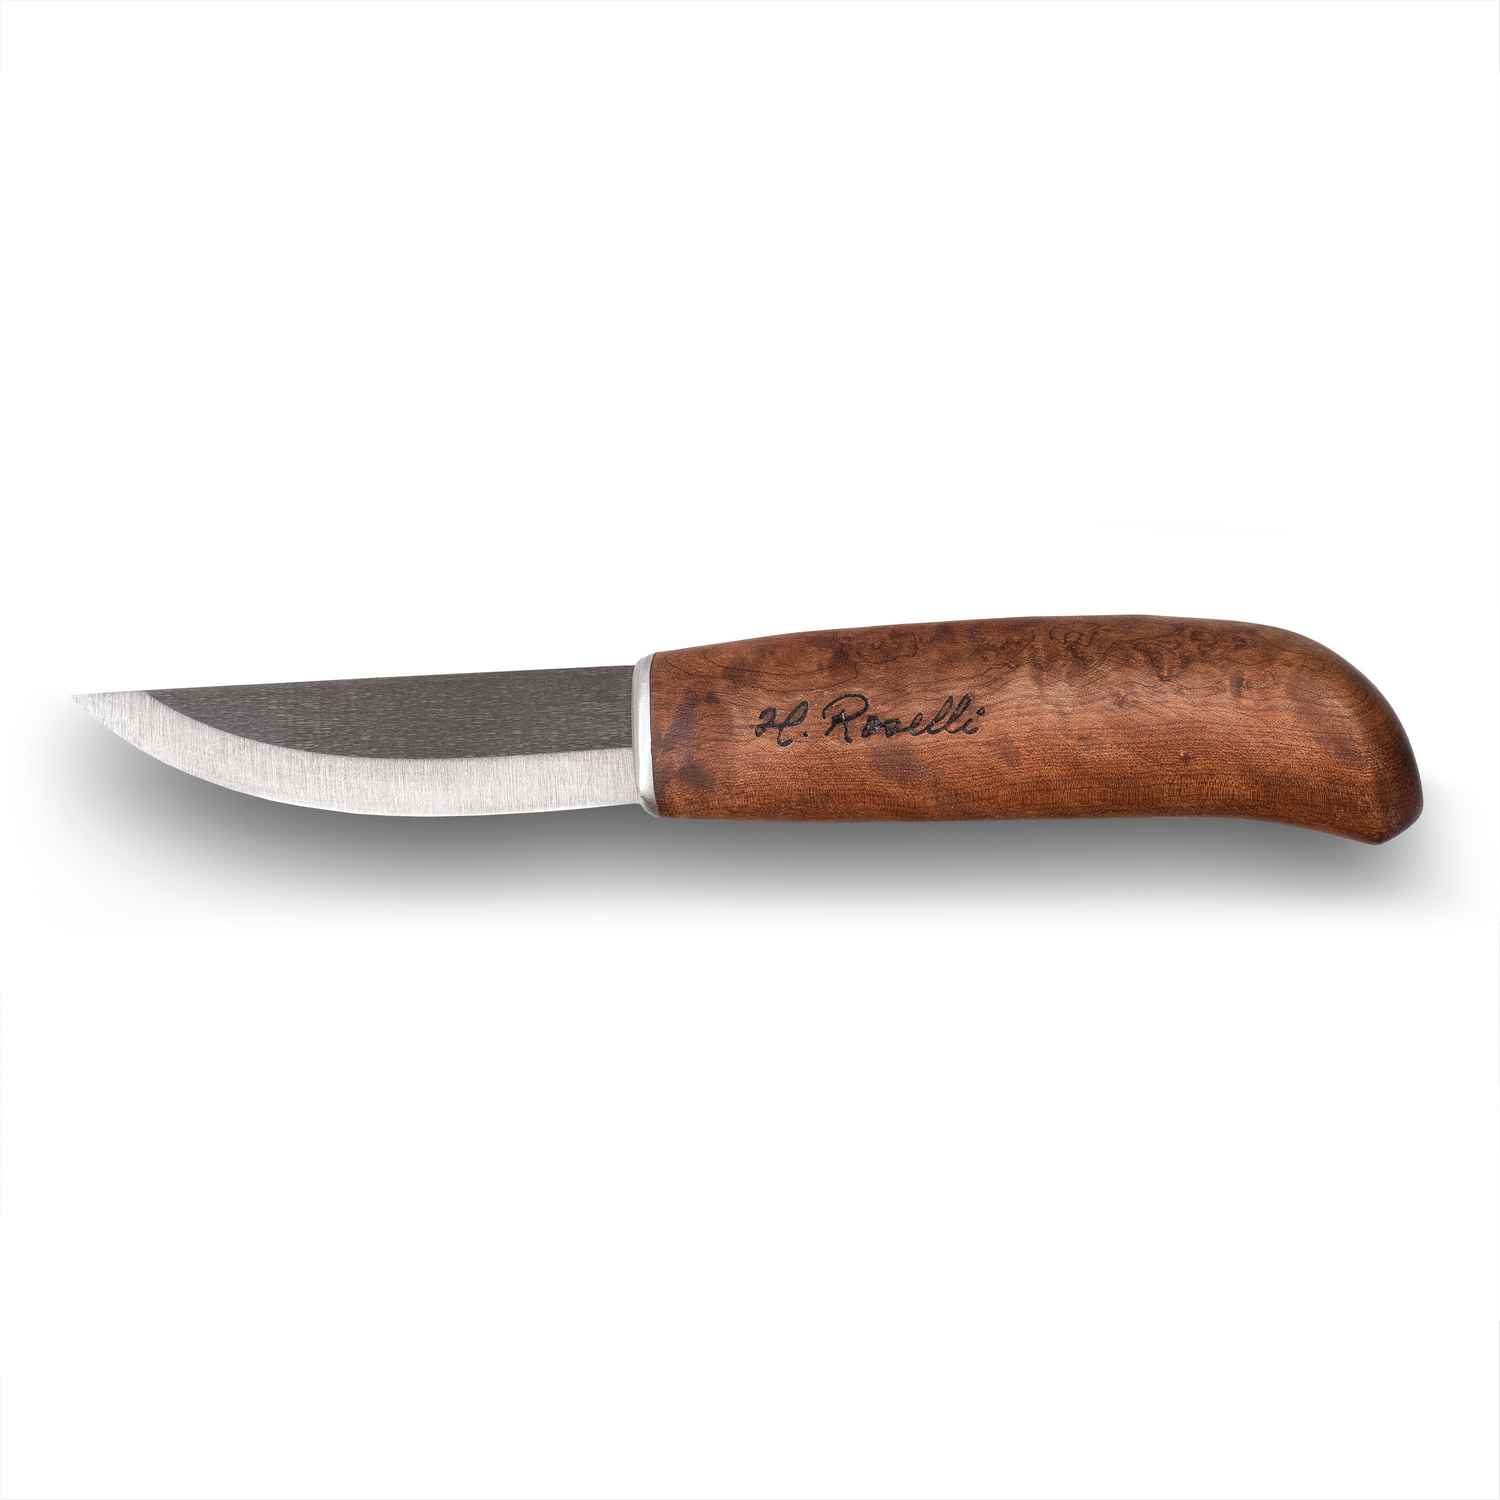 Roselli RW210 "UHC Carpenter Knife"